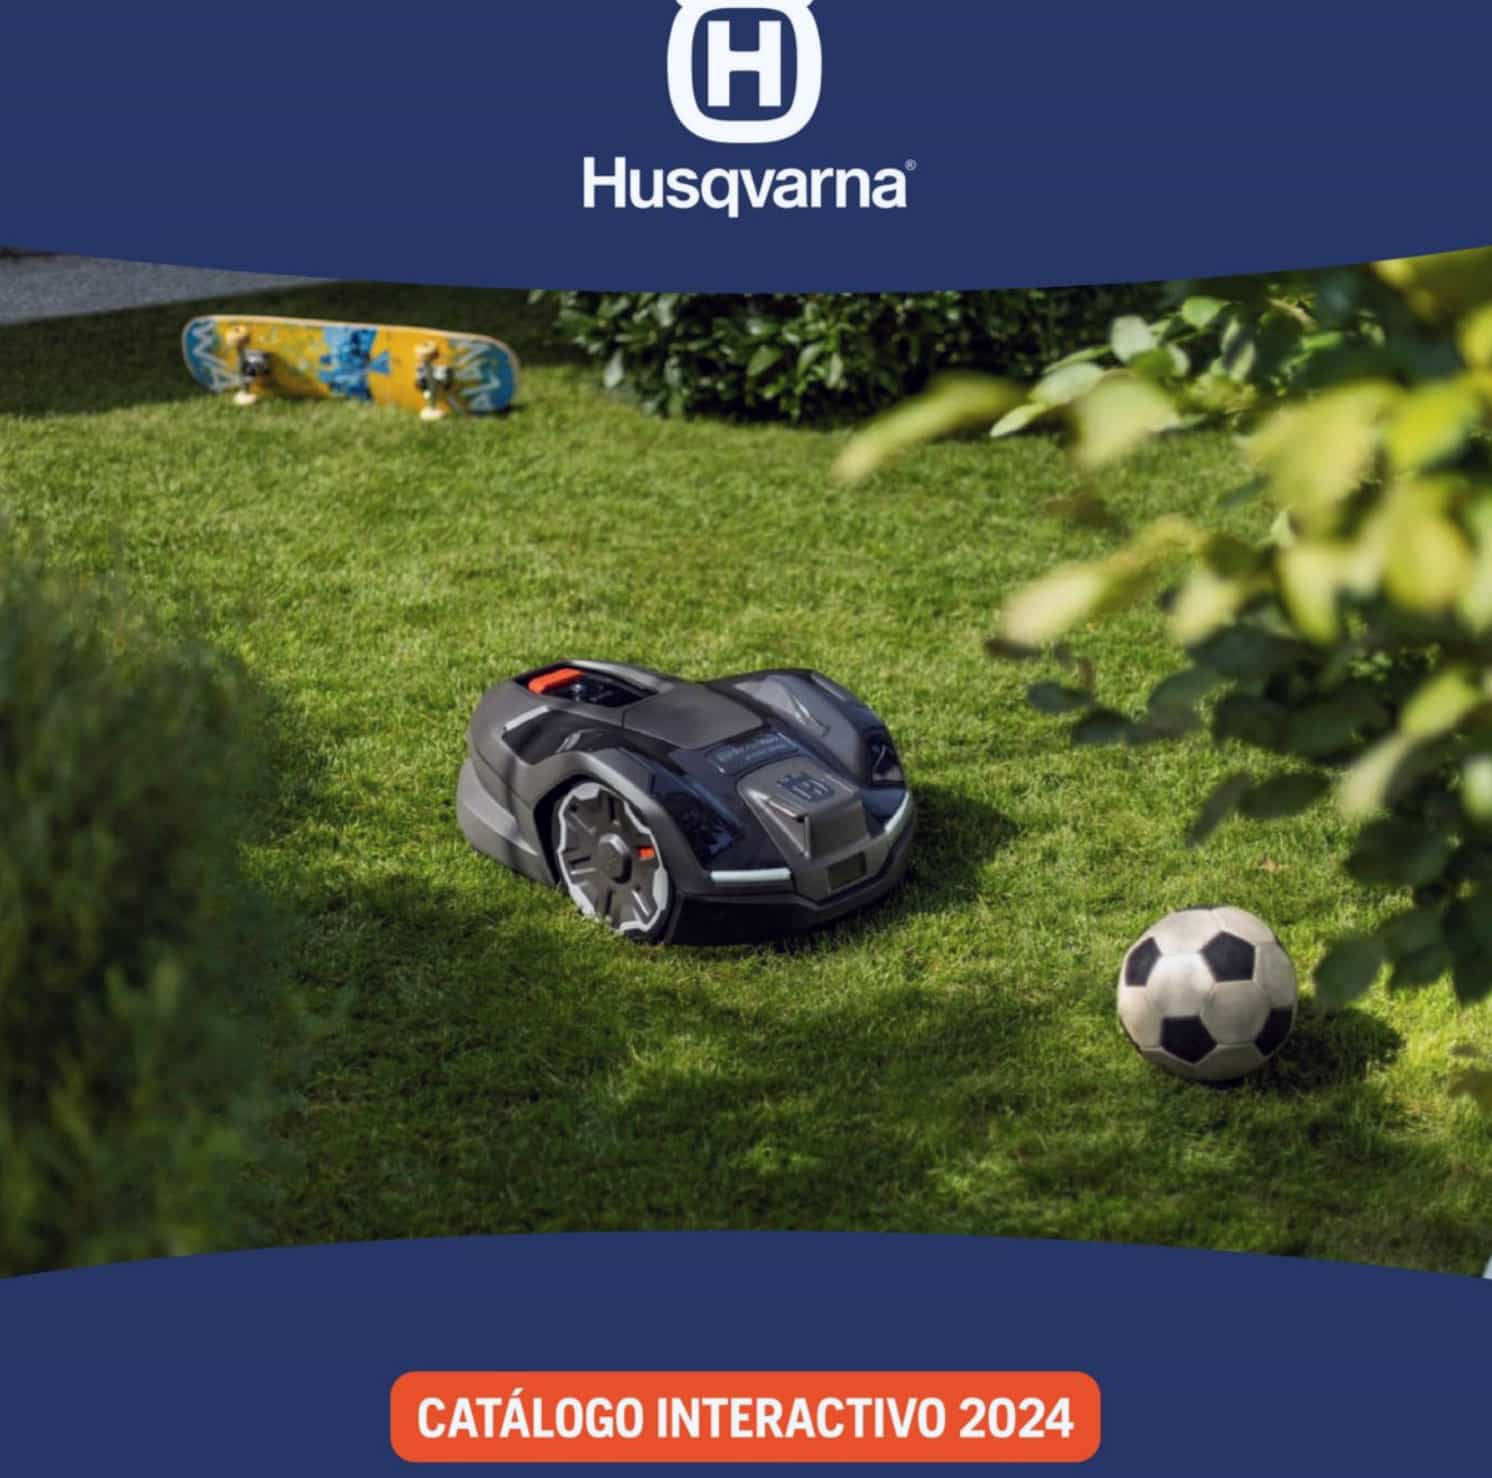 Catálogo interactivo Husqvarna 2024